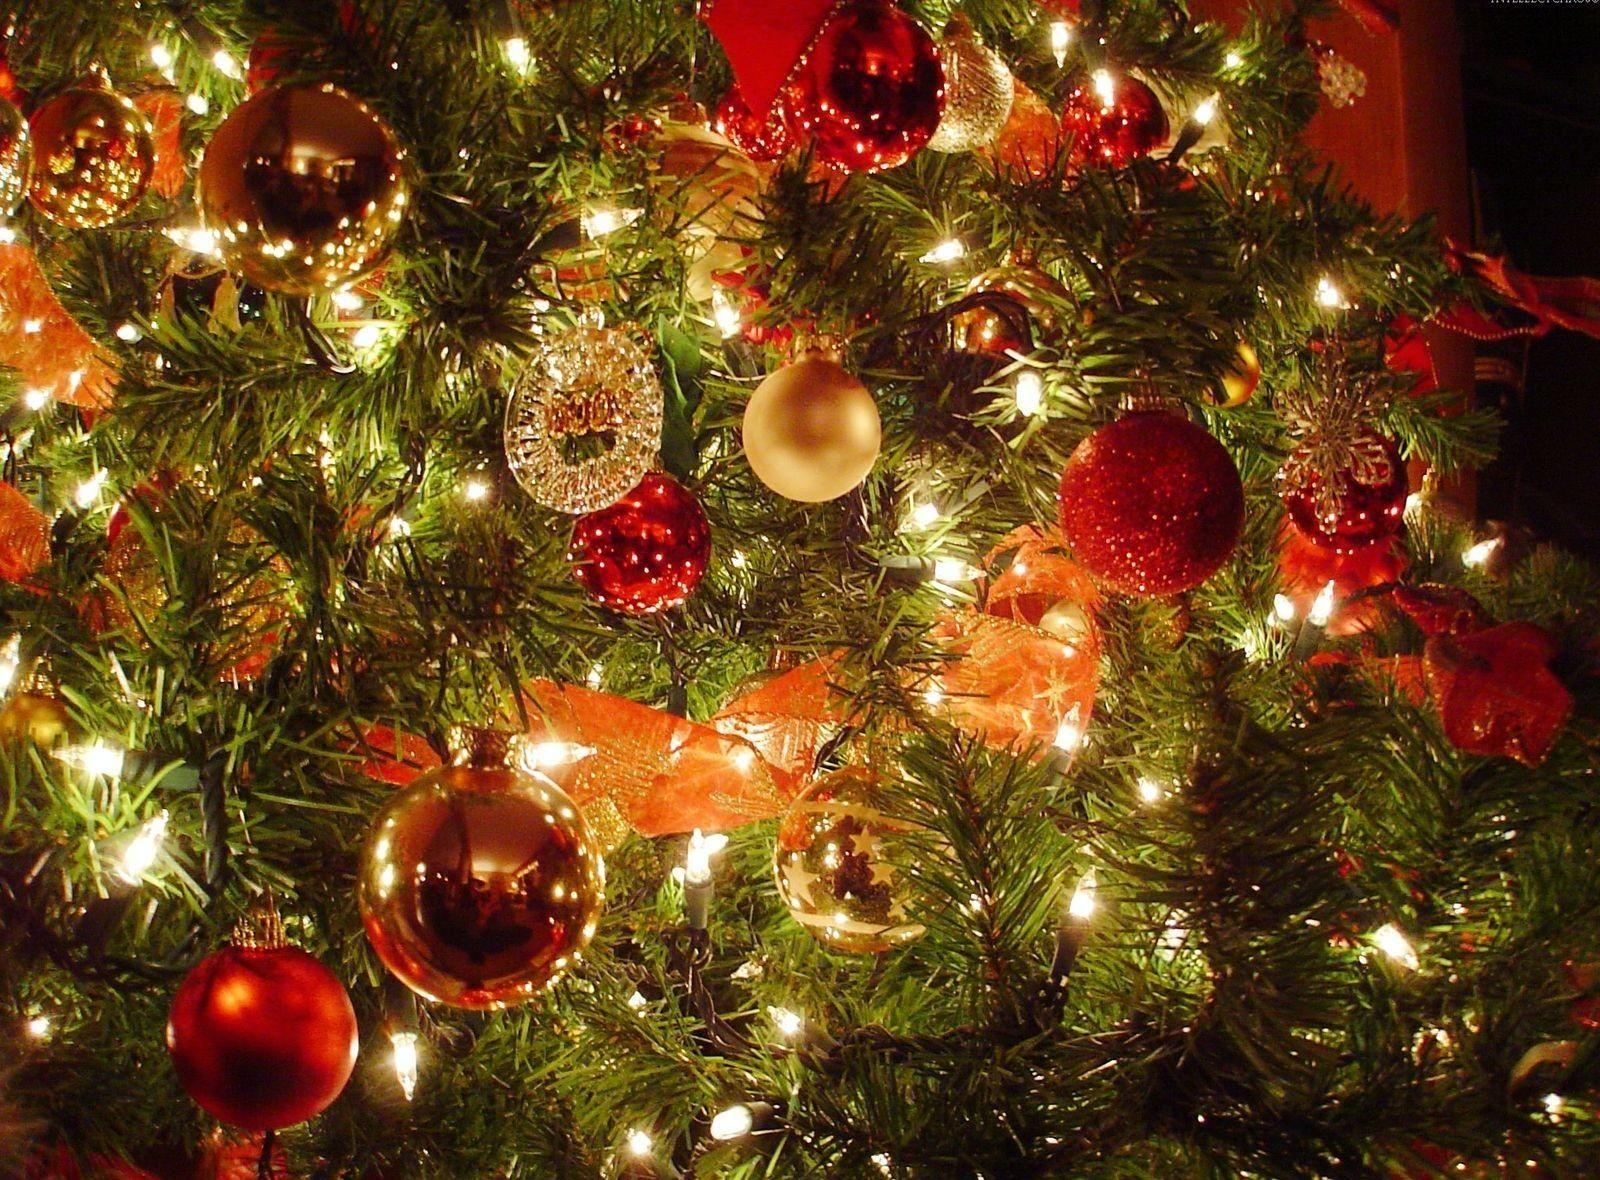 Download wallpaper 1600x1180 christmas tree, christmas decorations